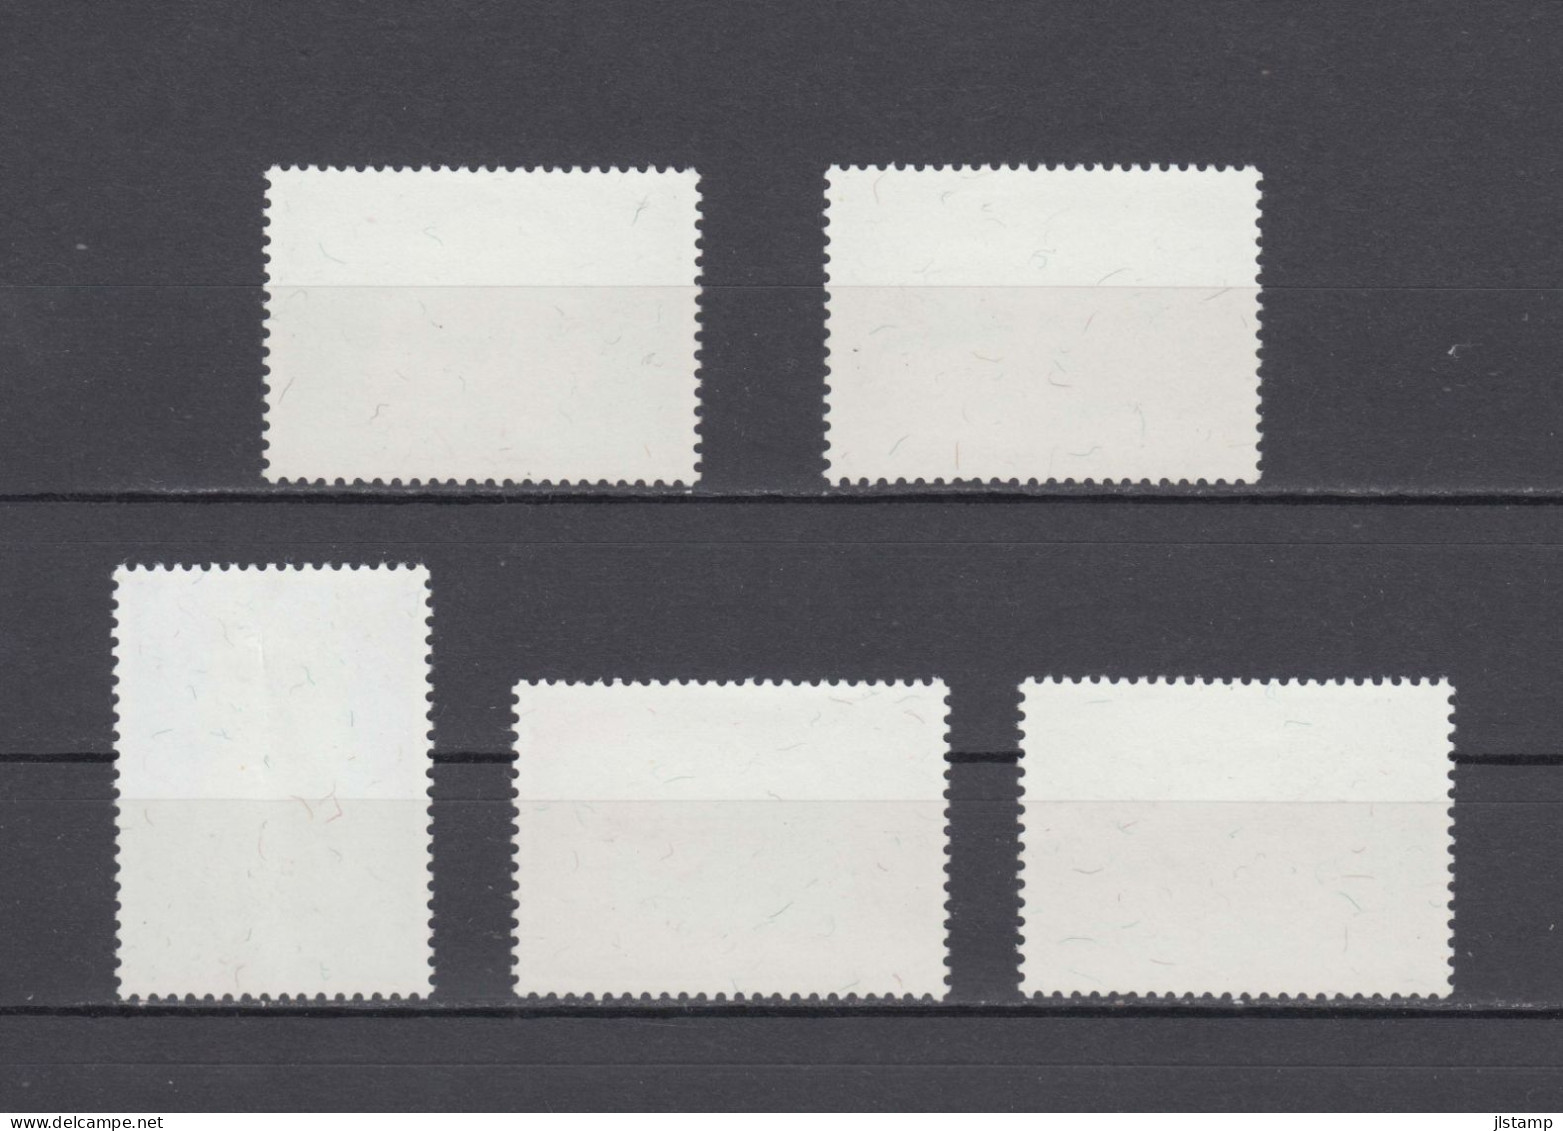 China Taiwan 1974 Porcelain Stamp Set,Scott#1864-1868, MNH,OG,VF, $1 Folded - Neufs